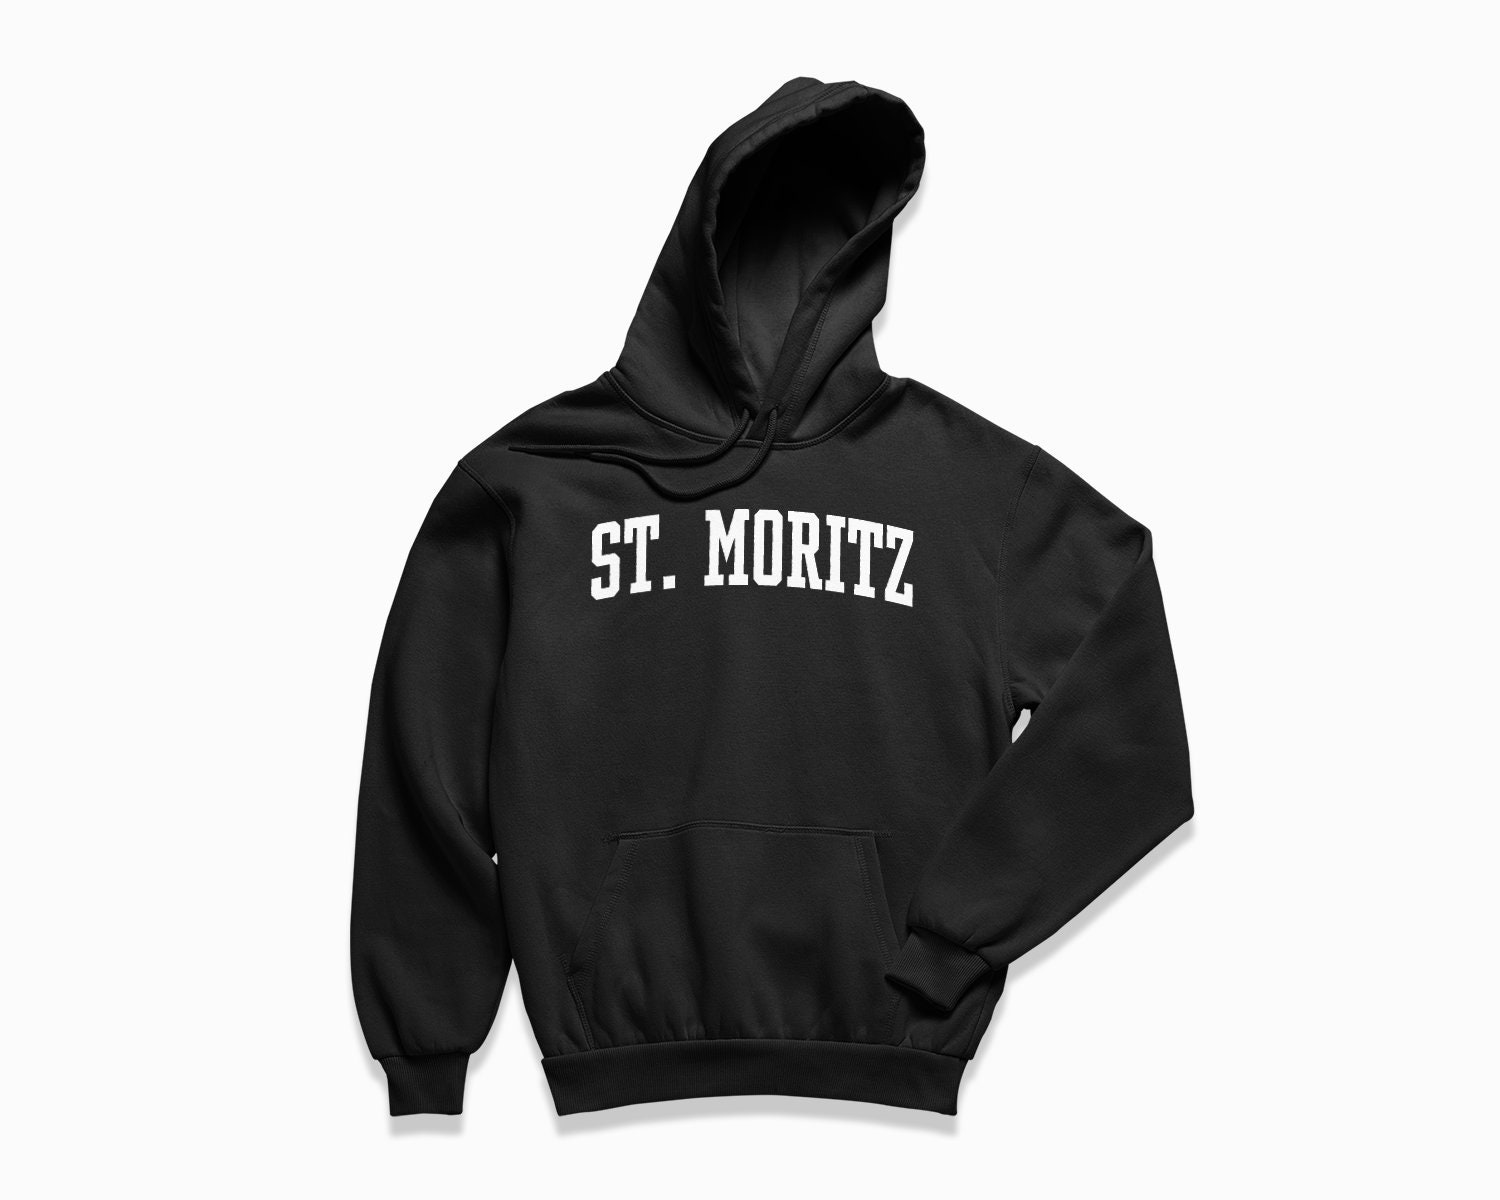 St. Moritz Hoodie: St. Moritz Switzerland Hooded Sweatshirt / - Etsy